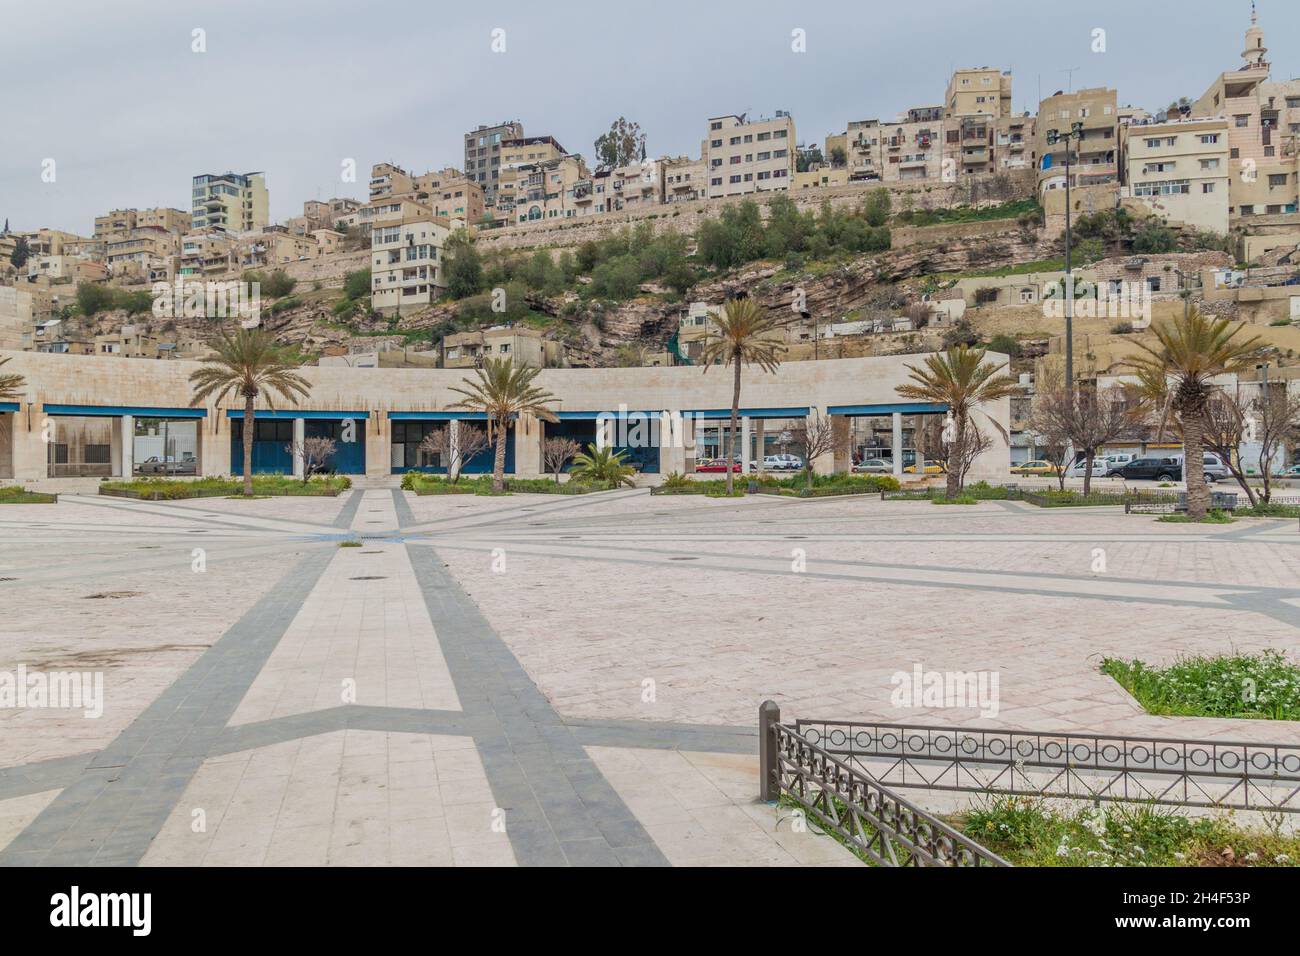 Nakheel Square in the center of Amman, Jordan Stock Photo